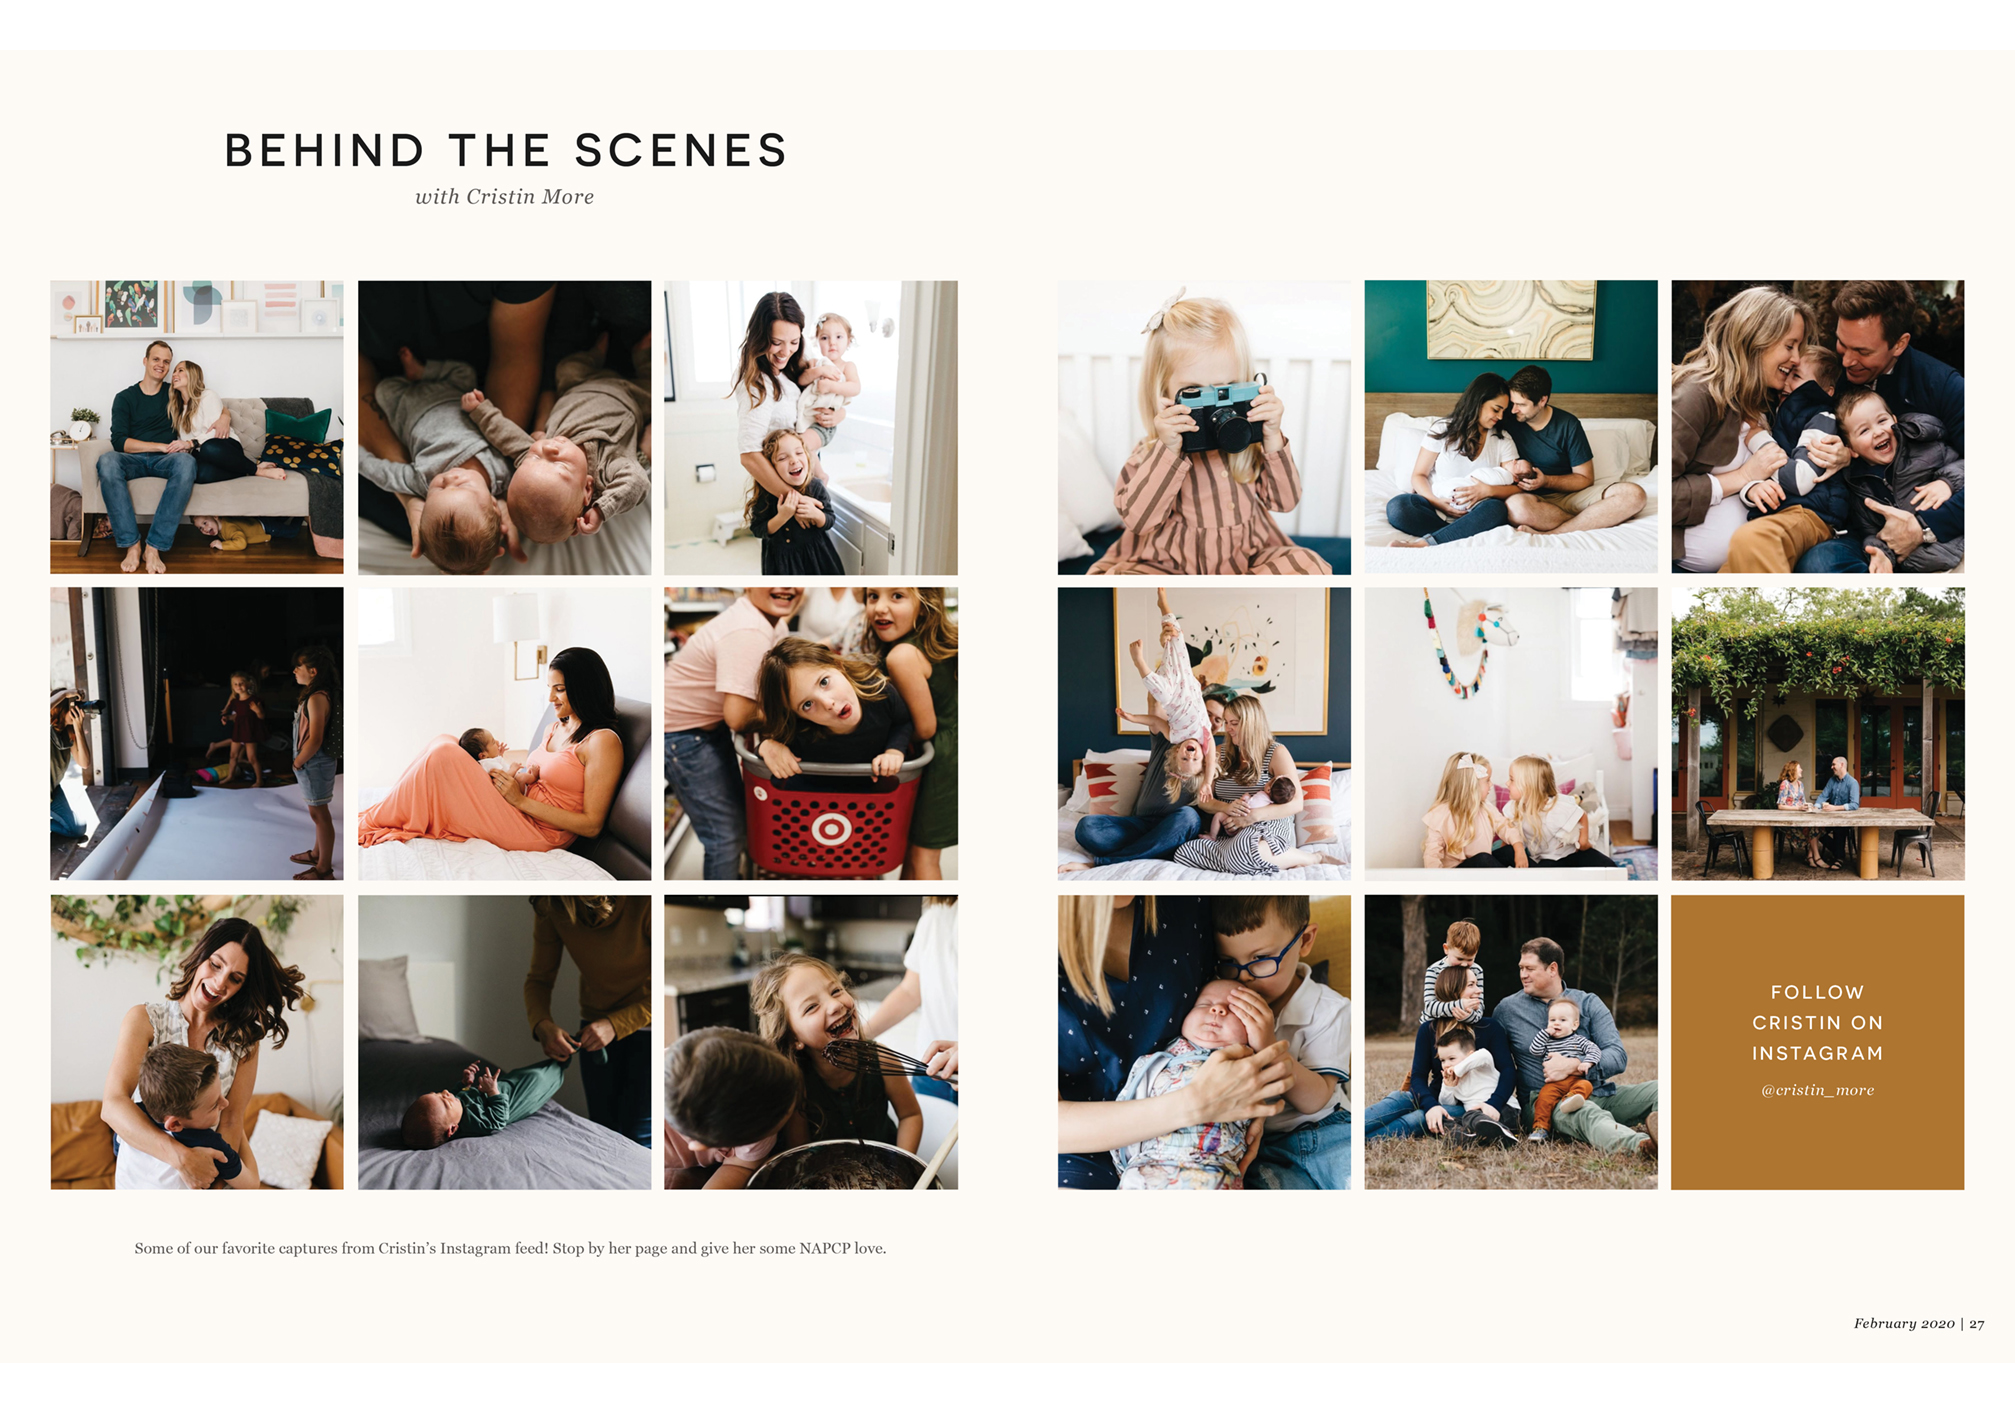 Behind the Scenes with Cristin More, Cristin More, Instagram, Instagram magazine spread